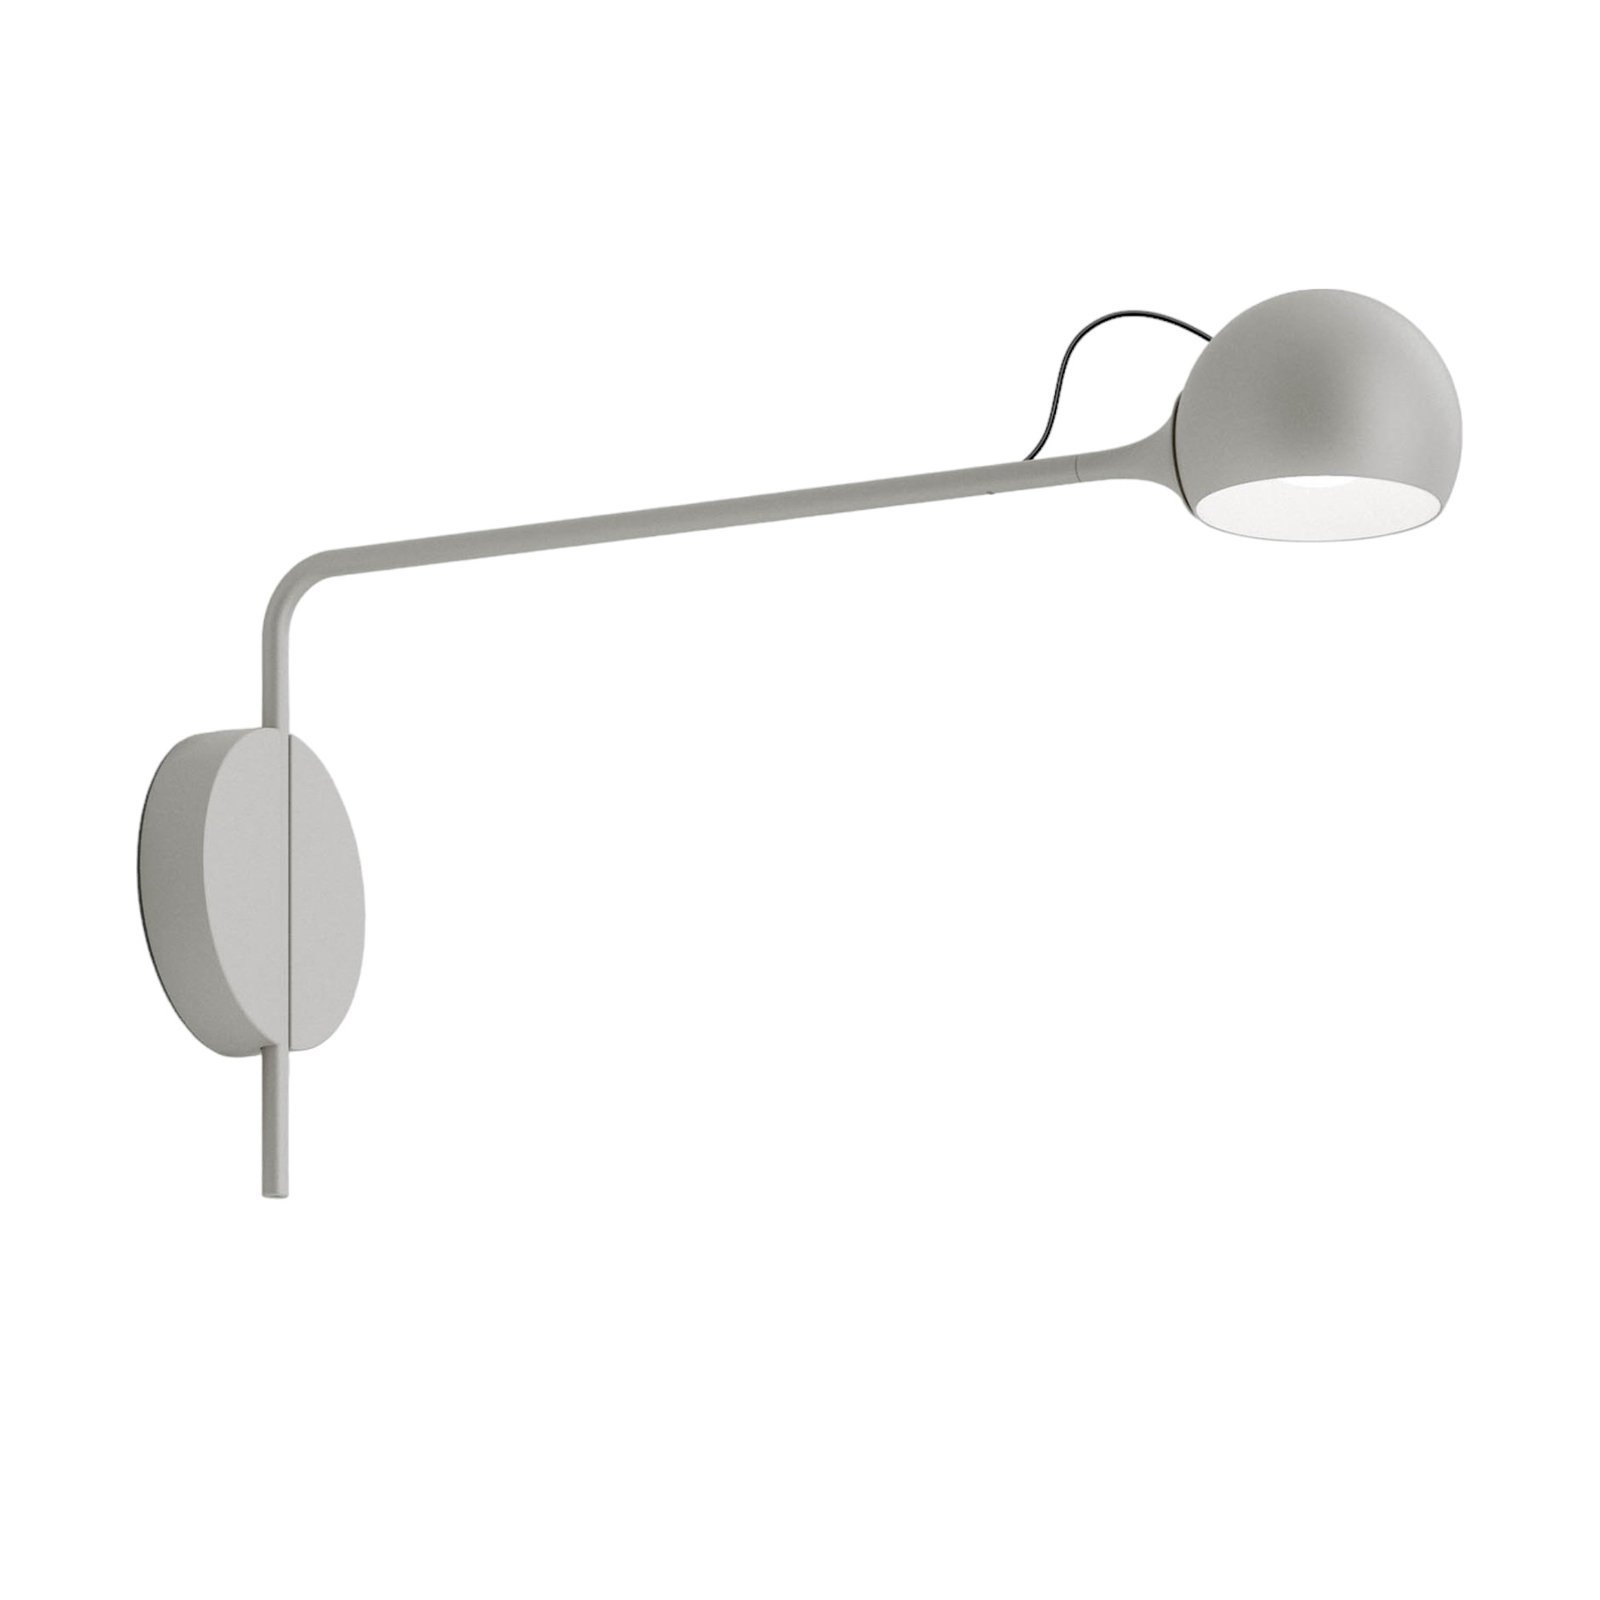 Artemide Ixa LED wall light, fixed arm, white grey